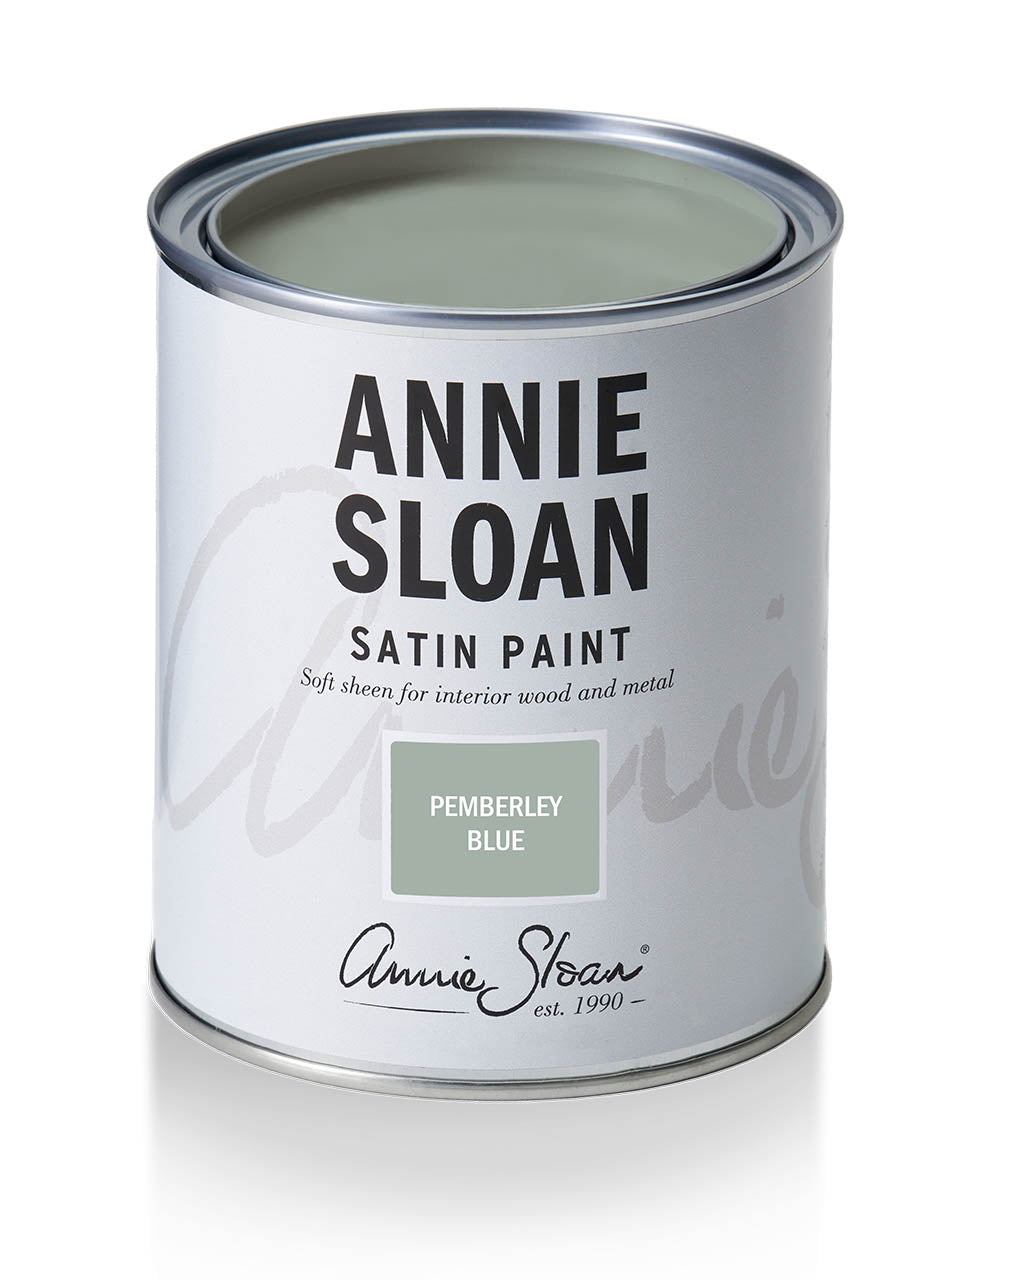 Pemberley Blue Satin Paint by Annie Sloan